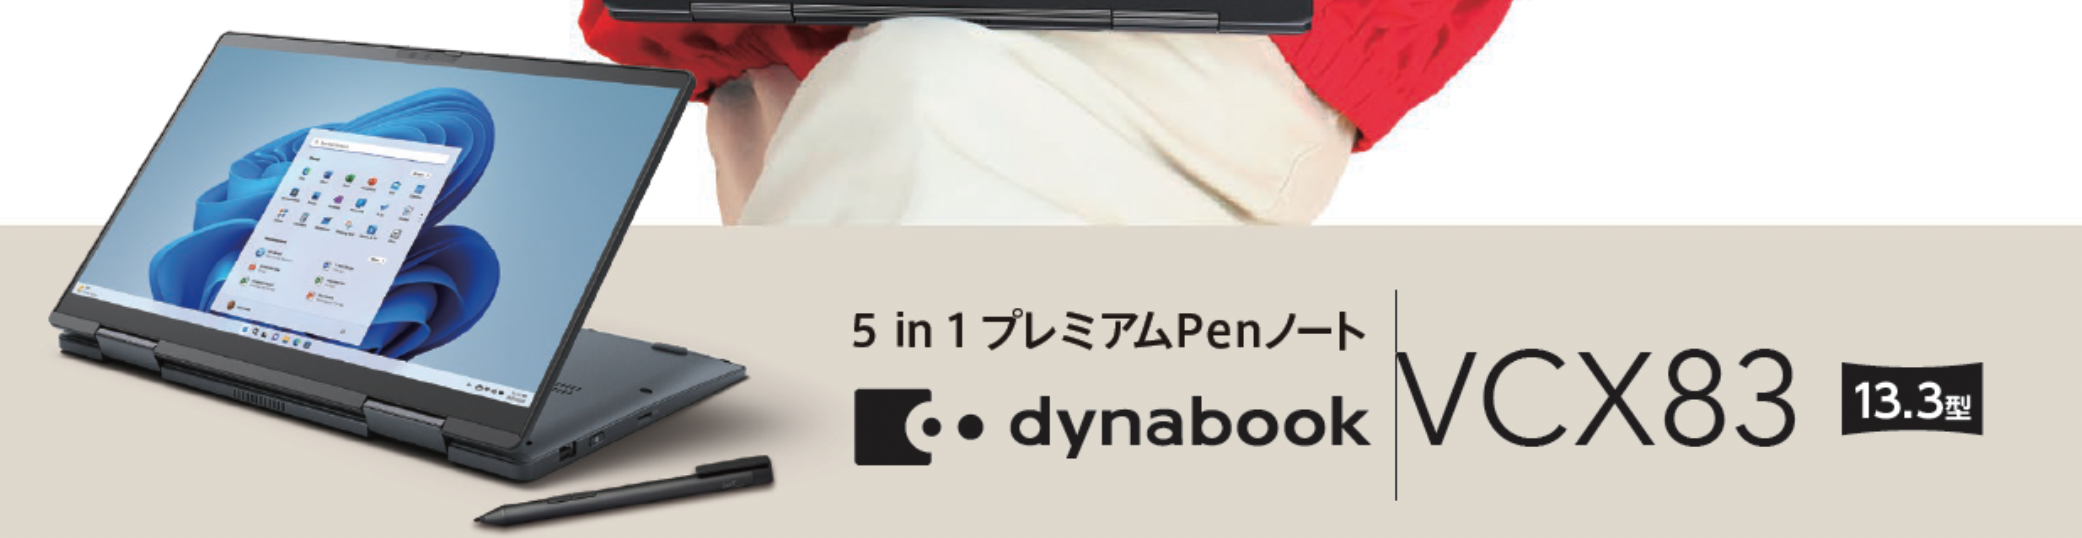 Win2in1/dynabook VCX①